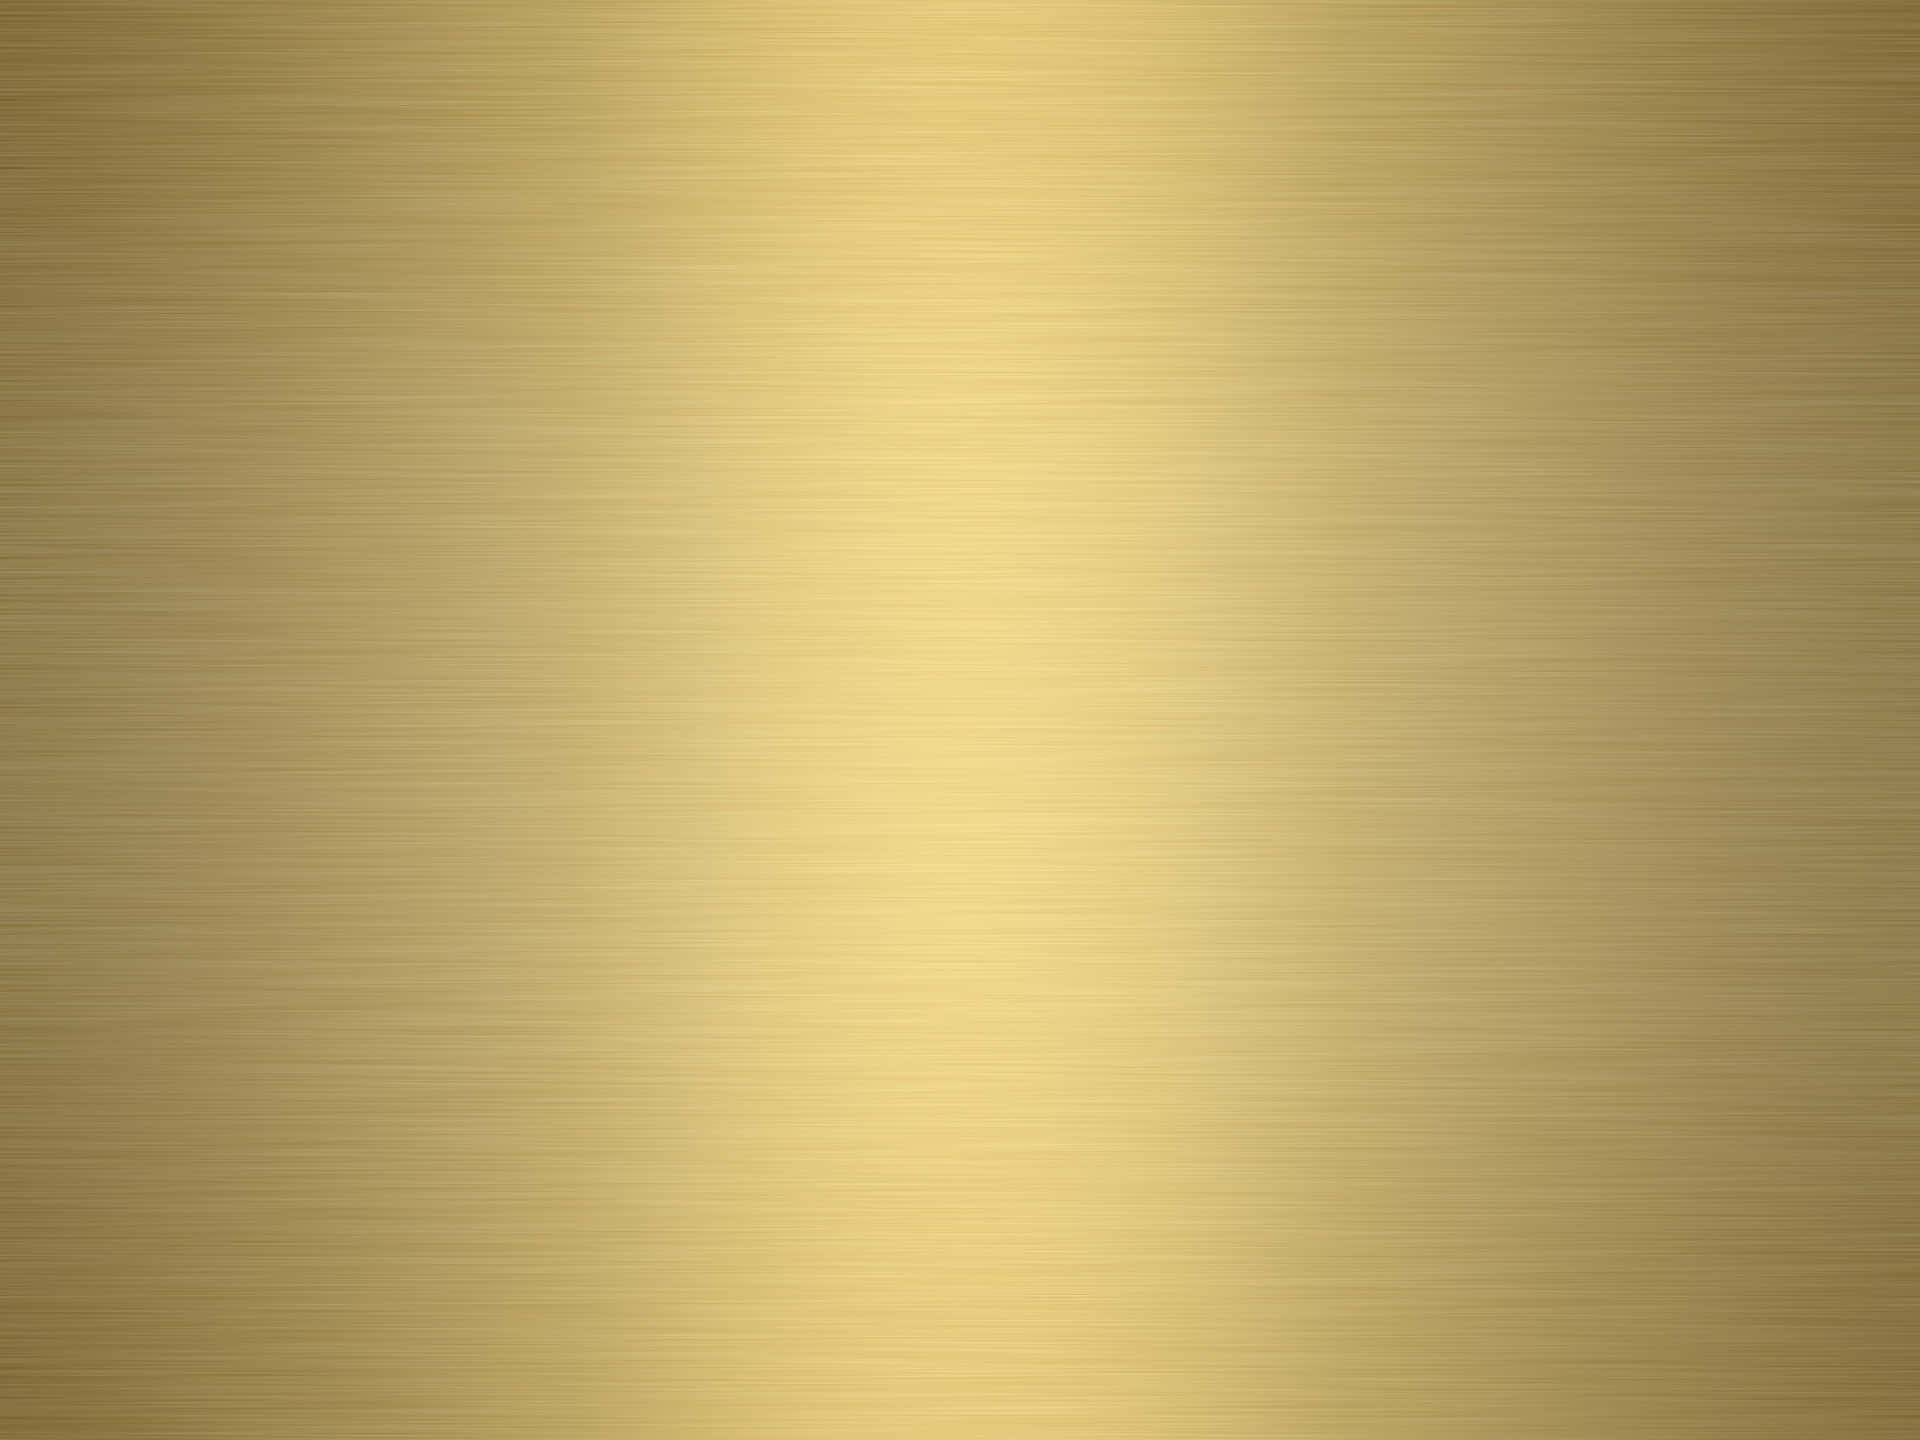 Fondoicónico De Color Dorado Metálico Que Proporciona Un Contraste Llamativo. Fondo de pantalla